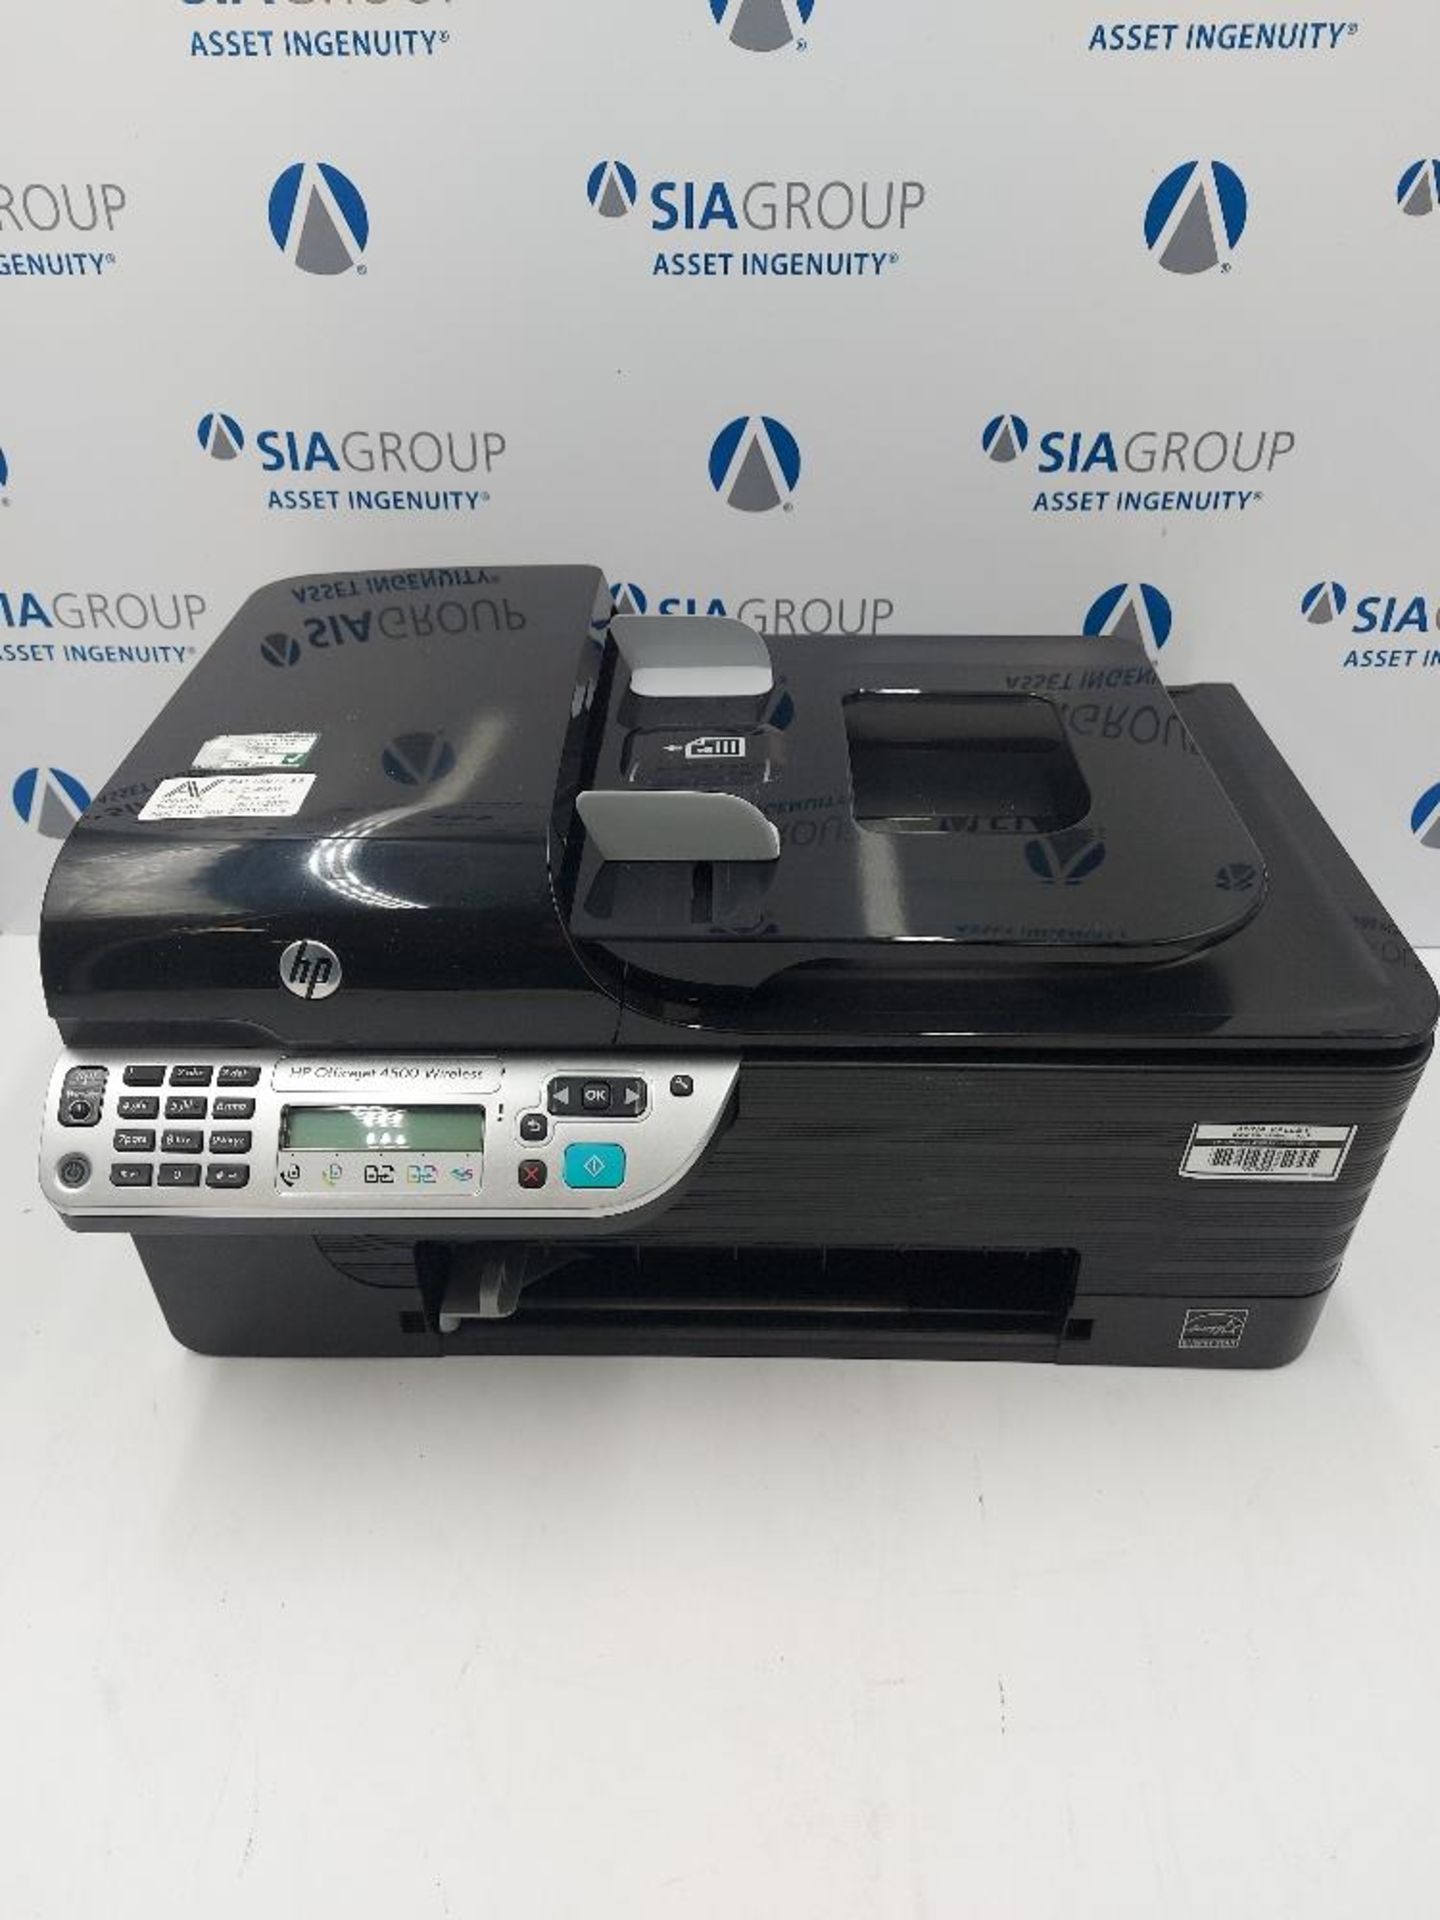 Hewlett Packard OfficeJet 4500 Wireless Printer with Flight Case - Image 2 of 3